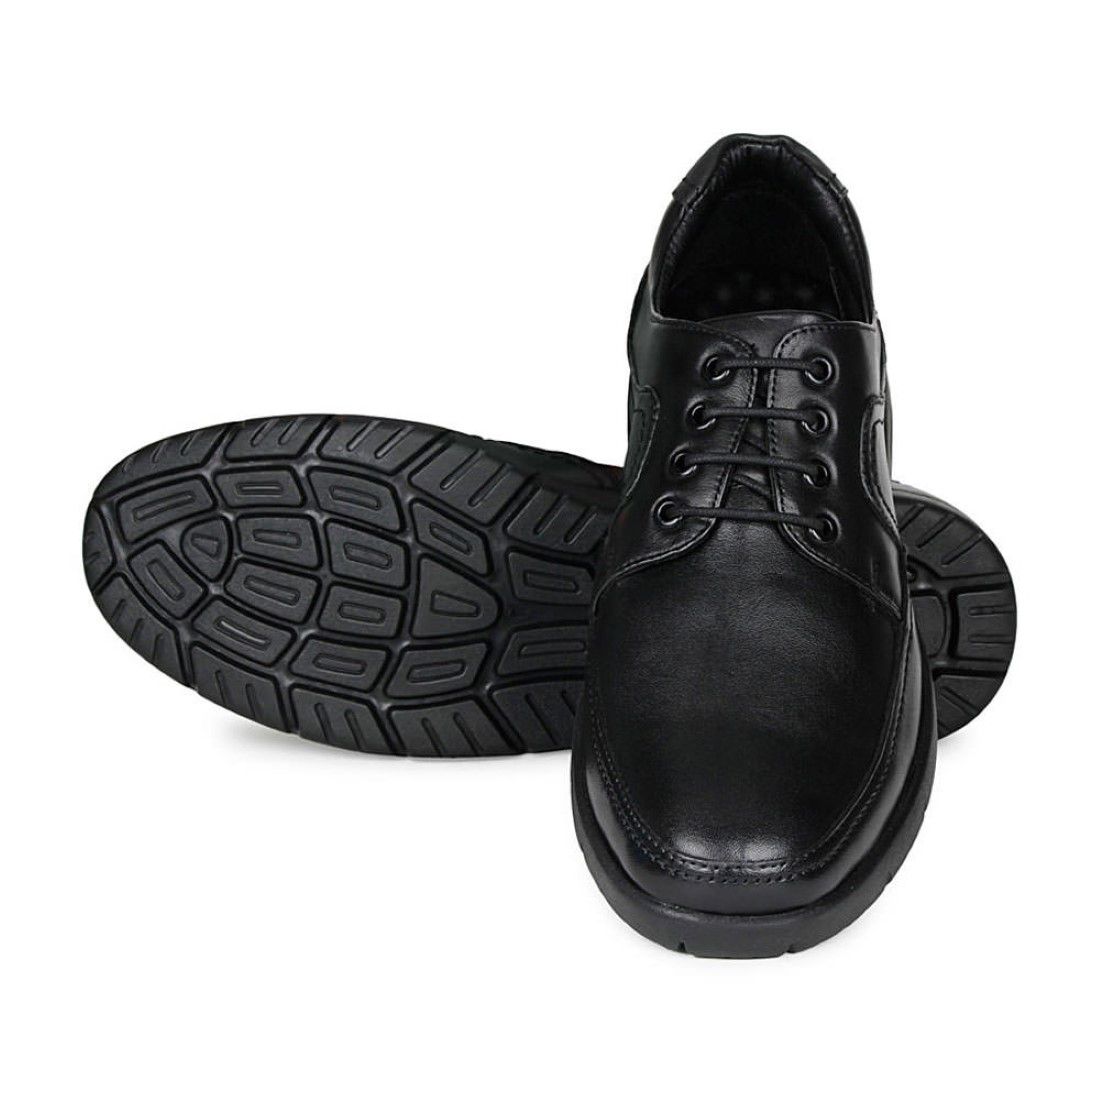 Liberty Healers Black Casual Shoes - Buy Liberty Healers Black Casual ...